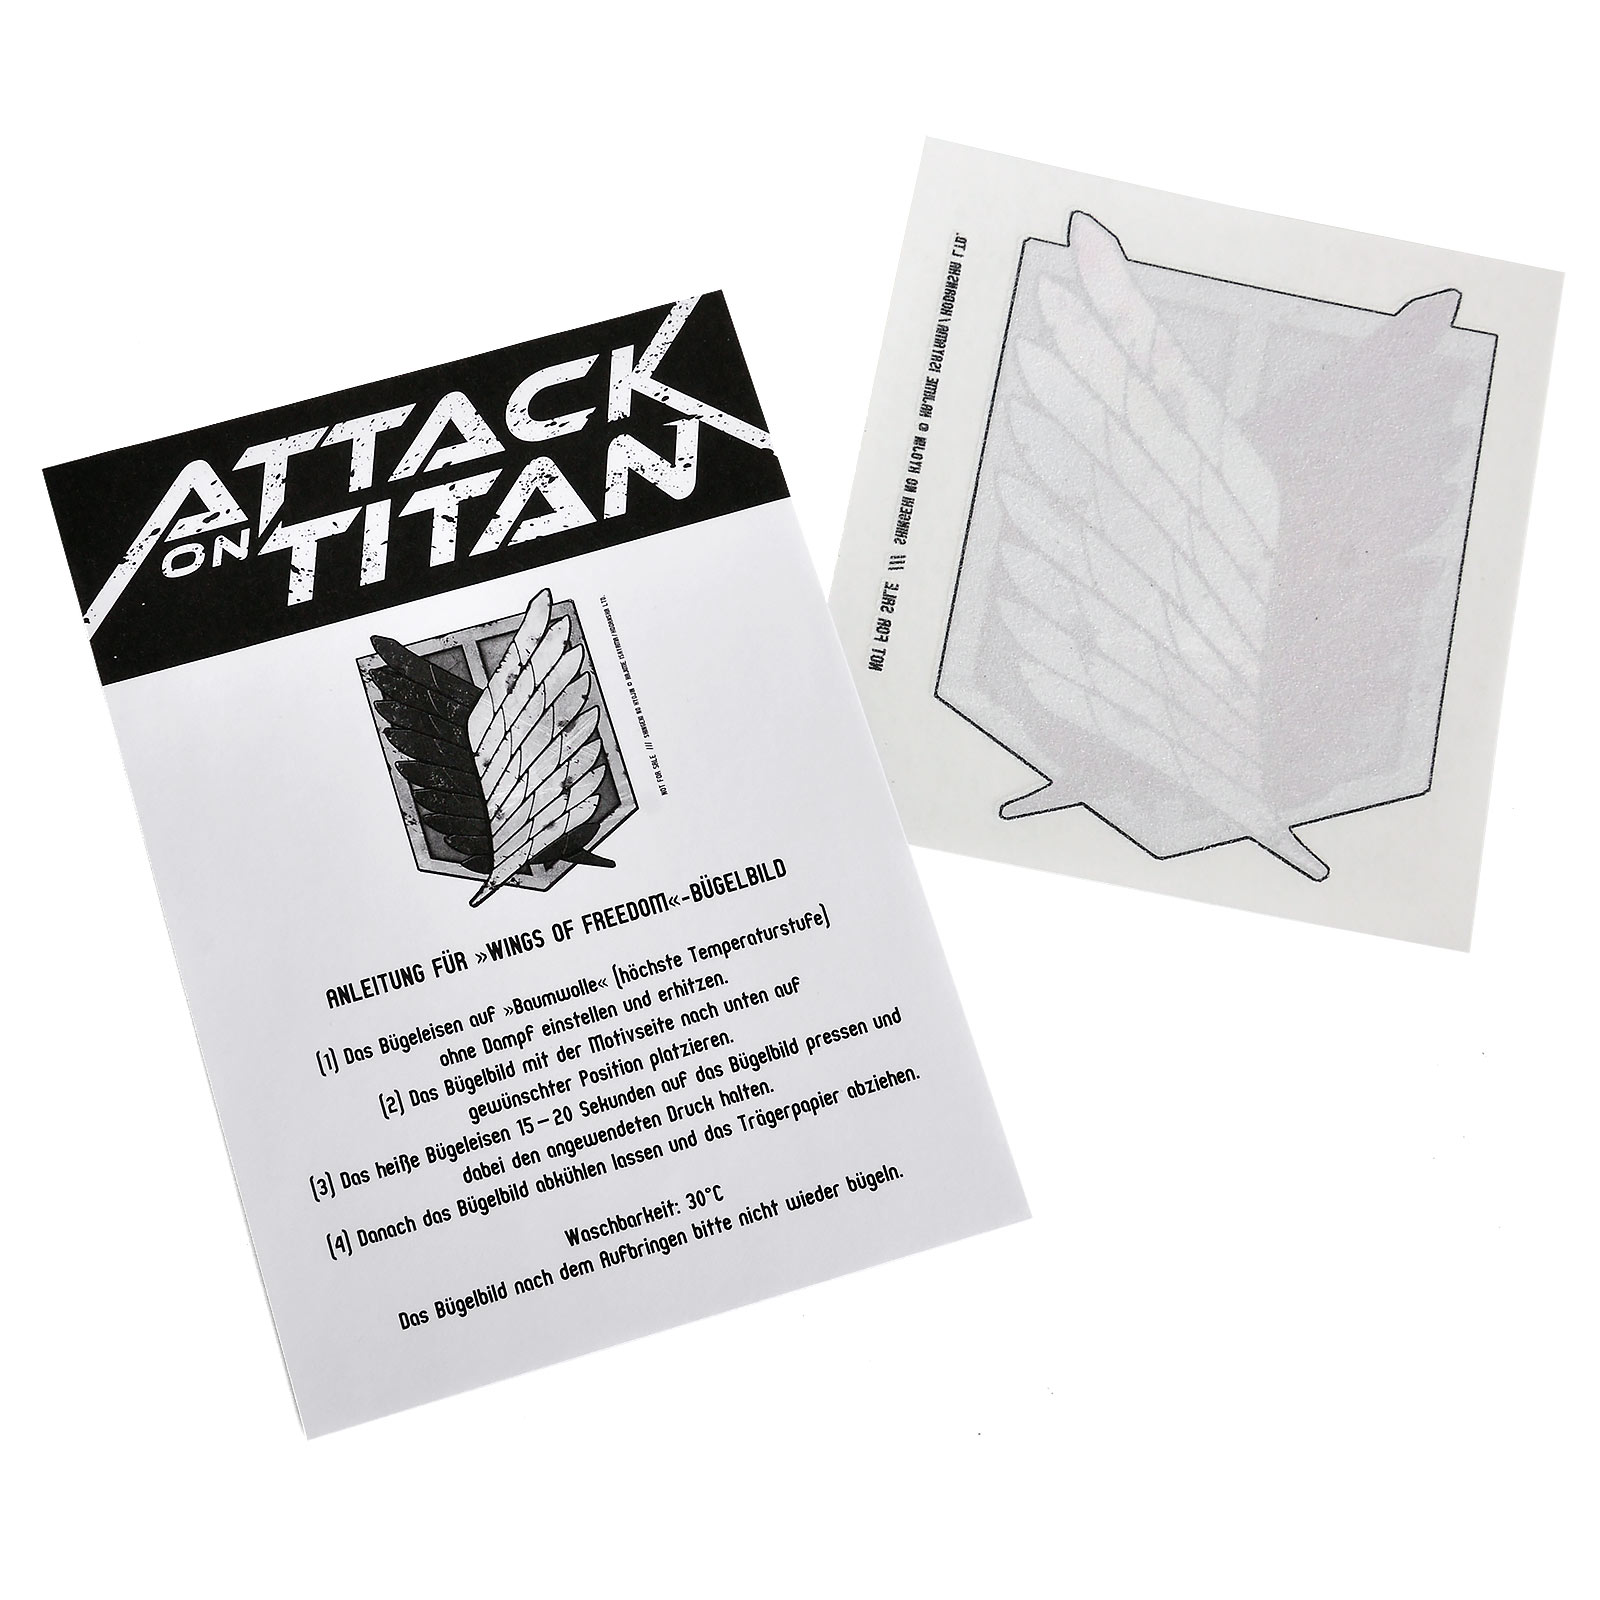 Attack on Titan - Coffret Collection Volume 1-5